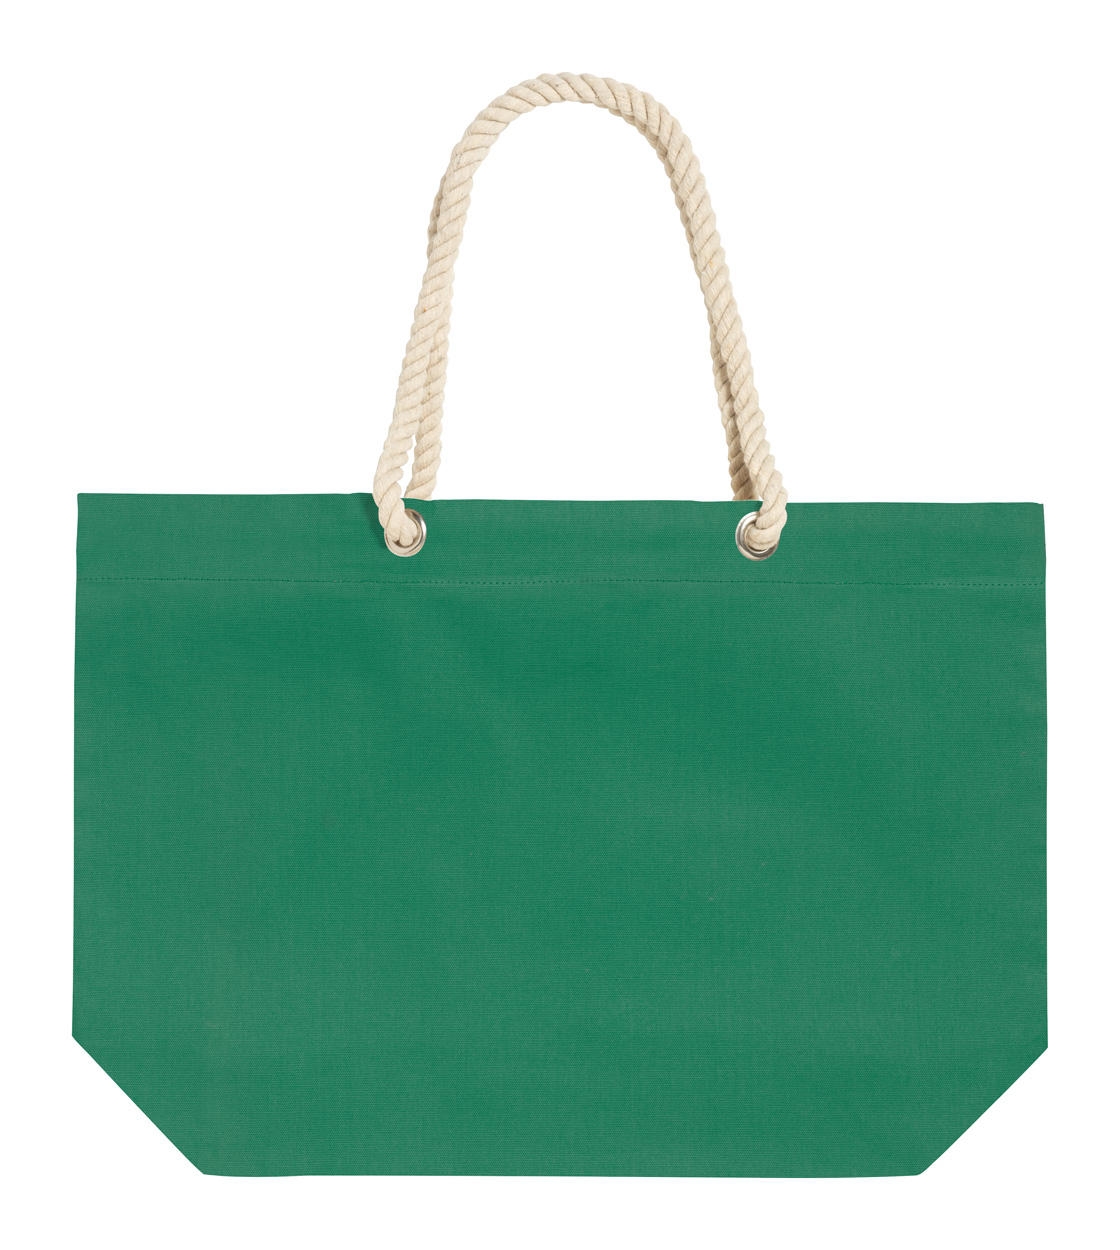 Kauly beach bag - green